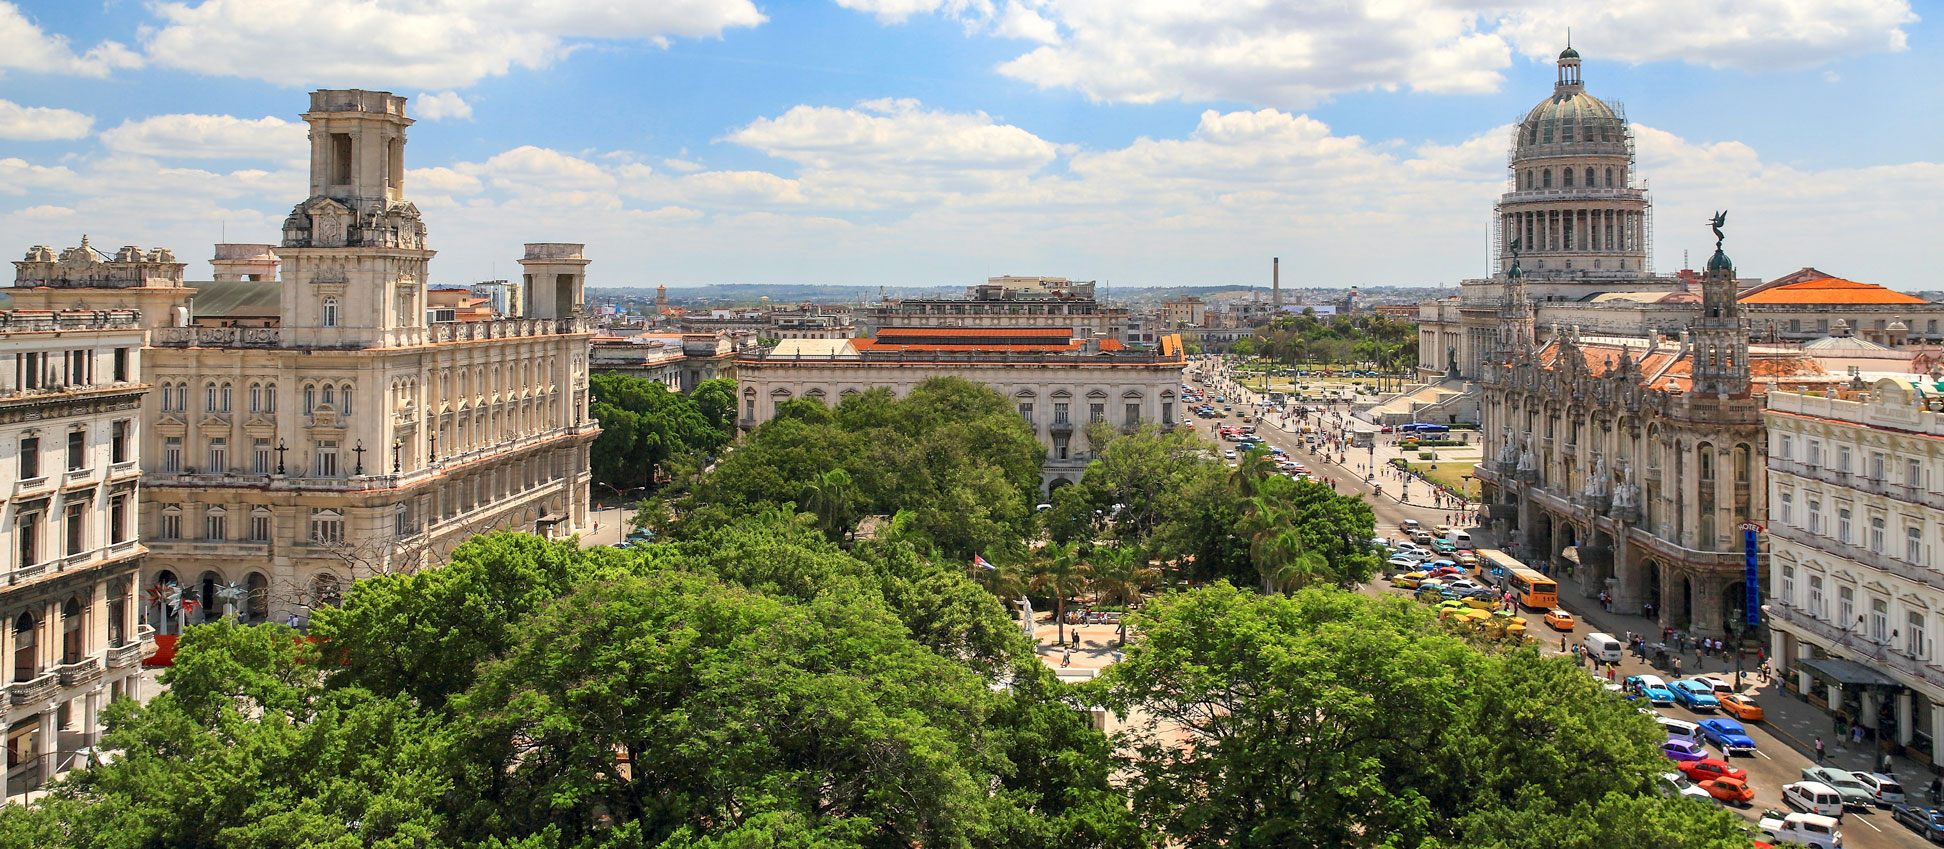 The National Capitol and the Gran Teatro de La Habana in Old Havana